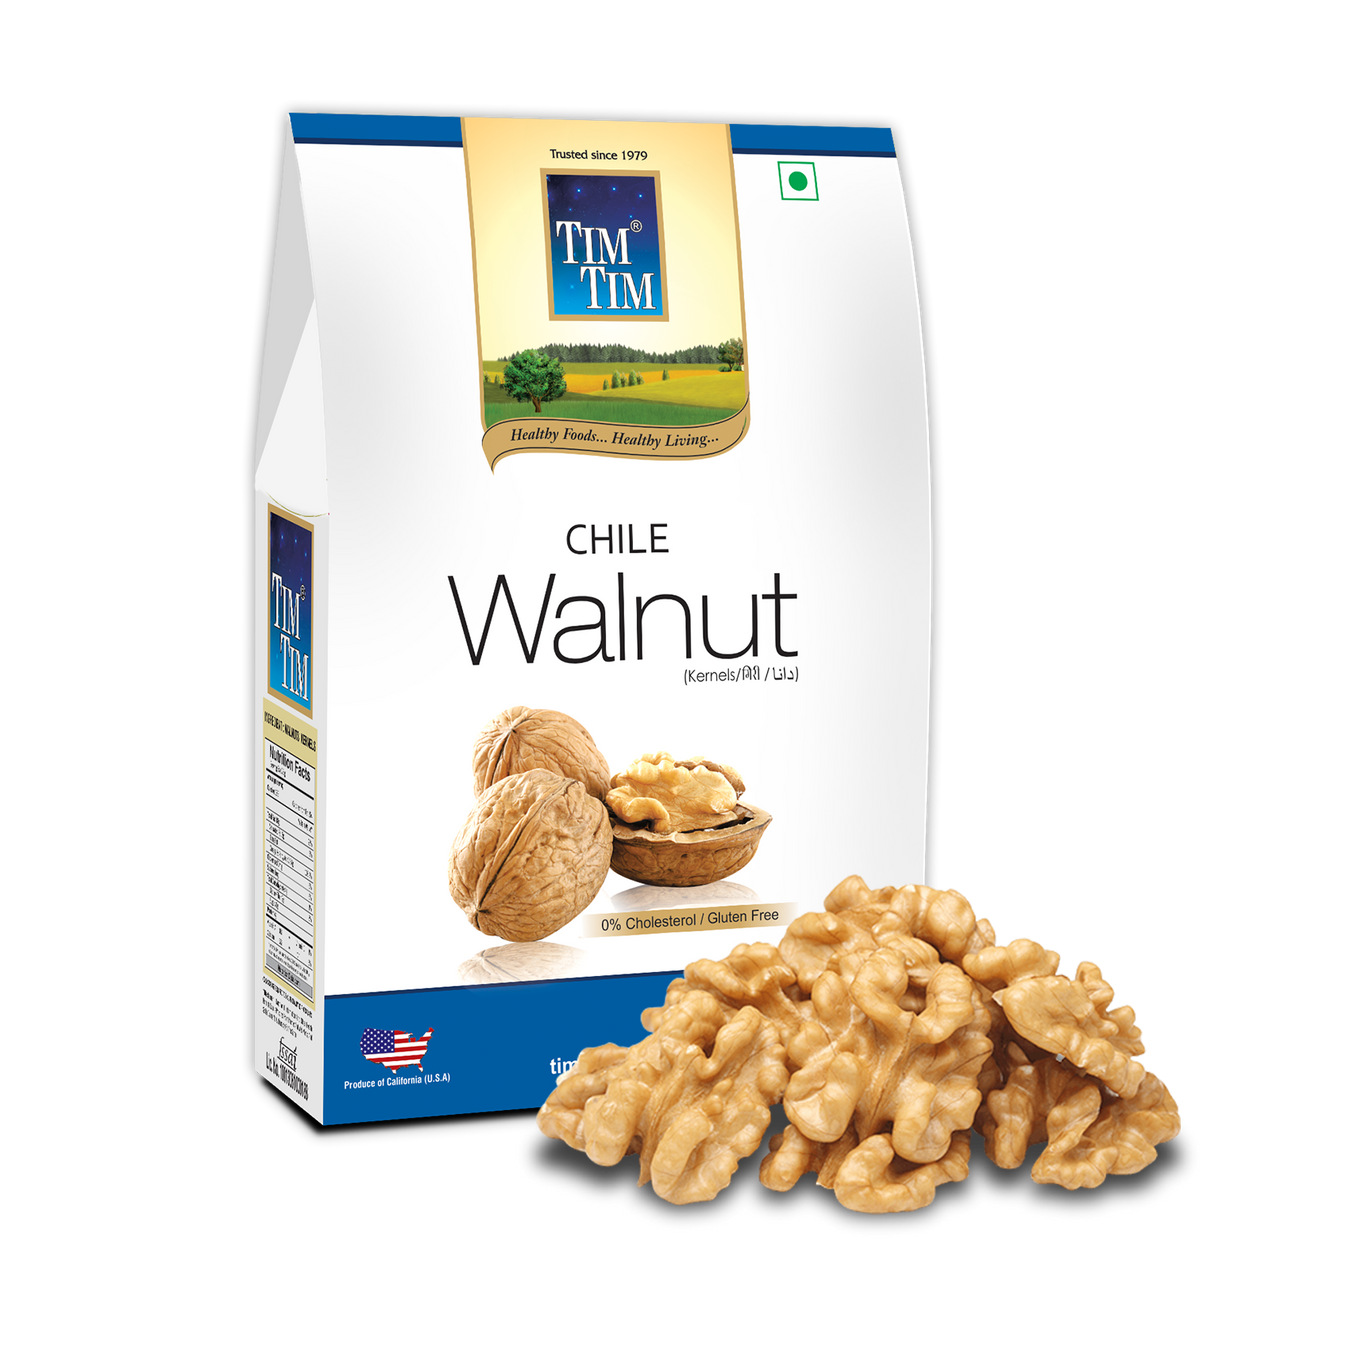 Chile Walnuts